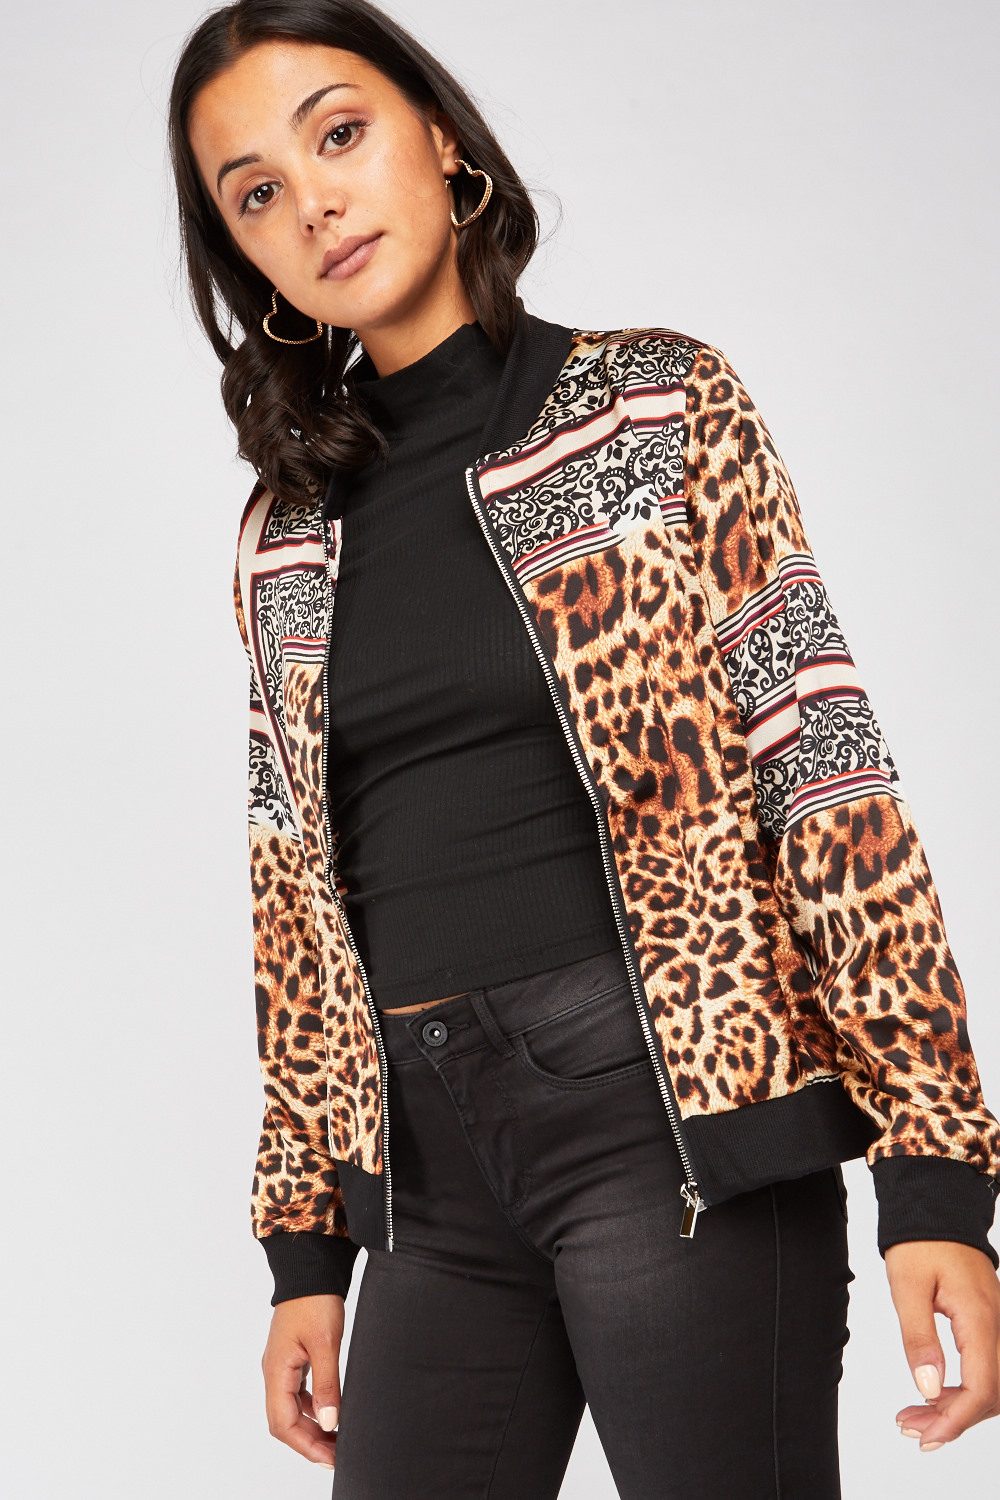 Mix Leopard Print Sateen Jacket - Just $7